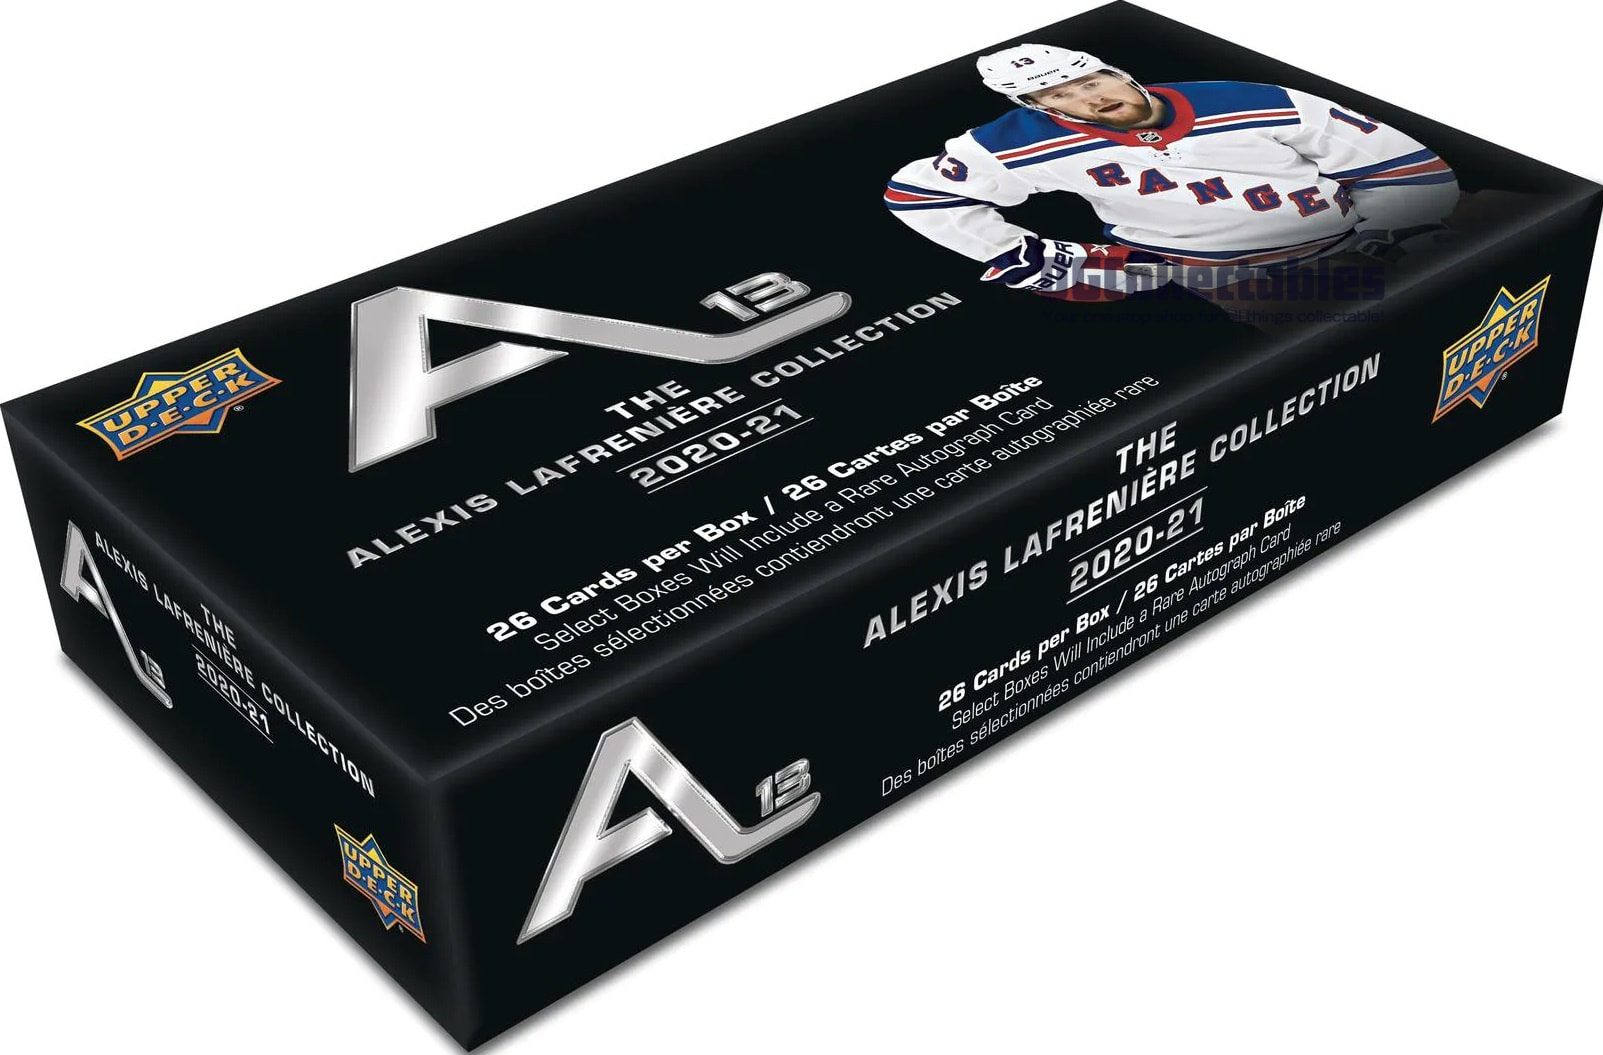 2020/21 Upper Deck Alexis LaFreniere Hockey Hobby Box Set